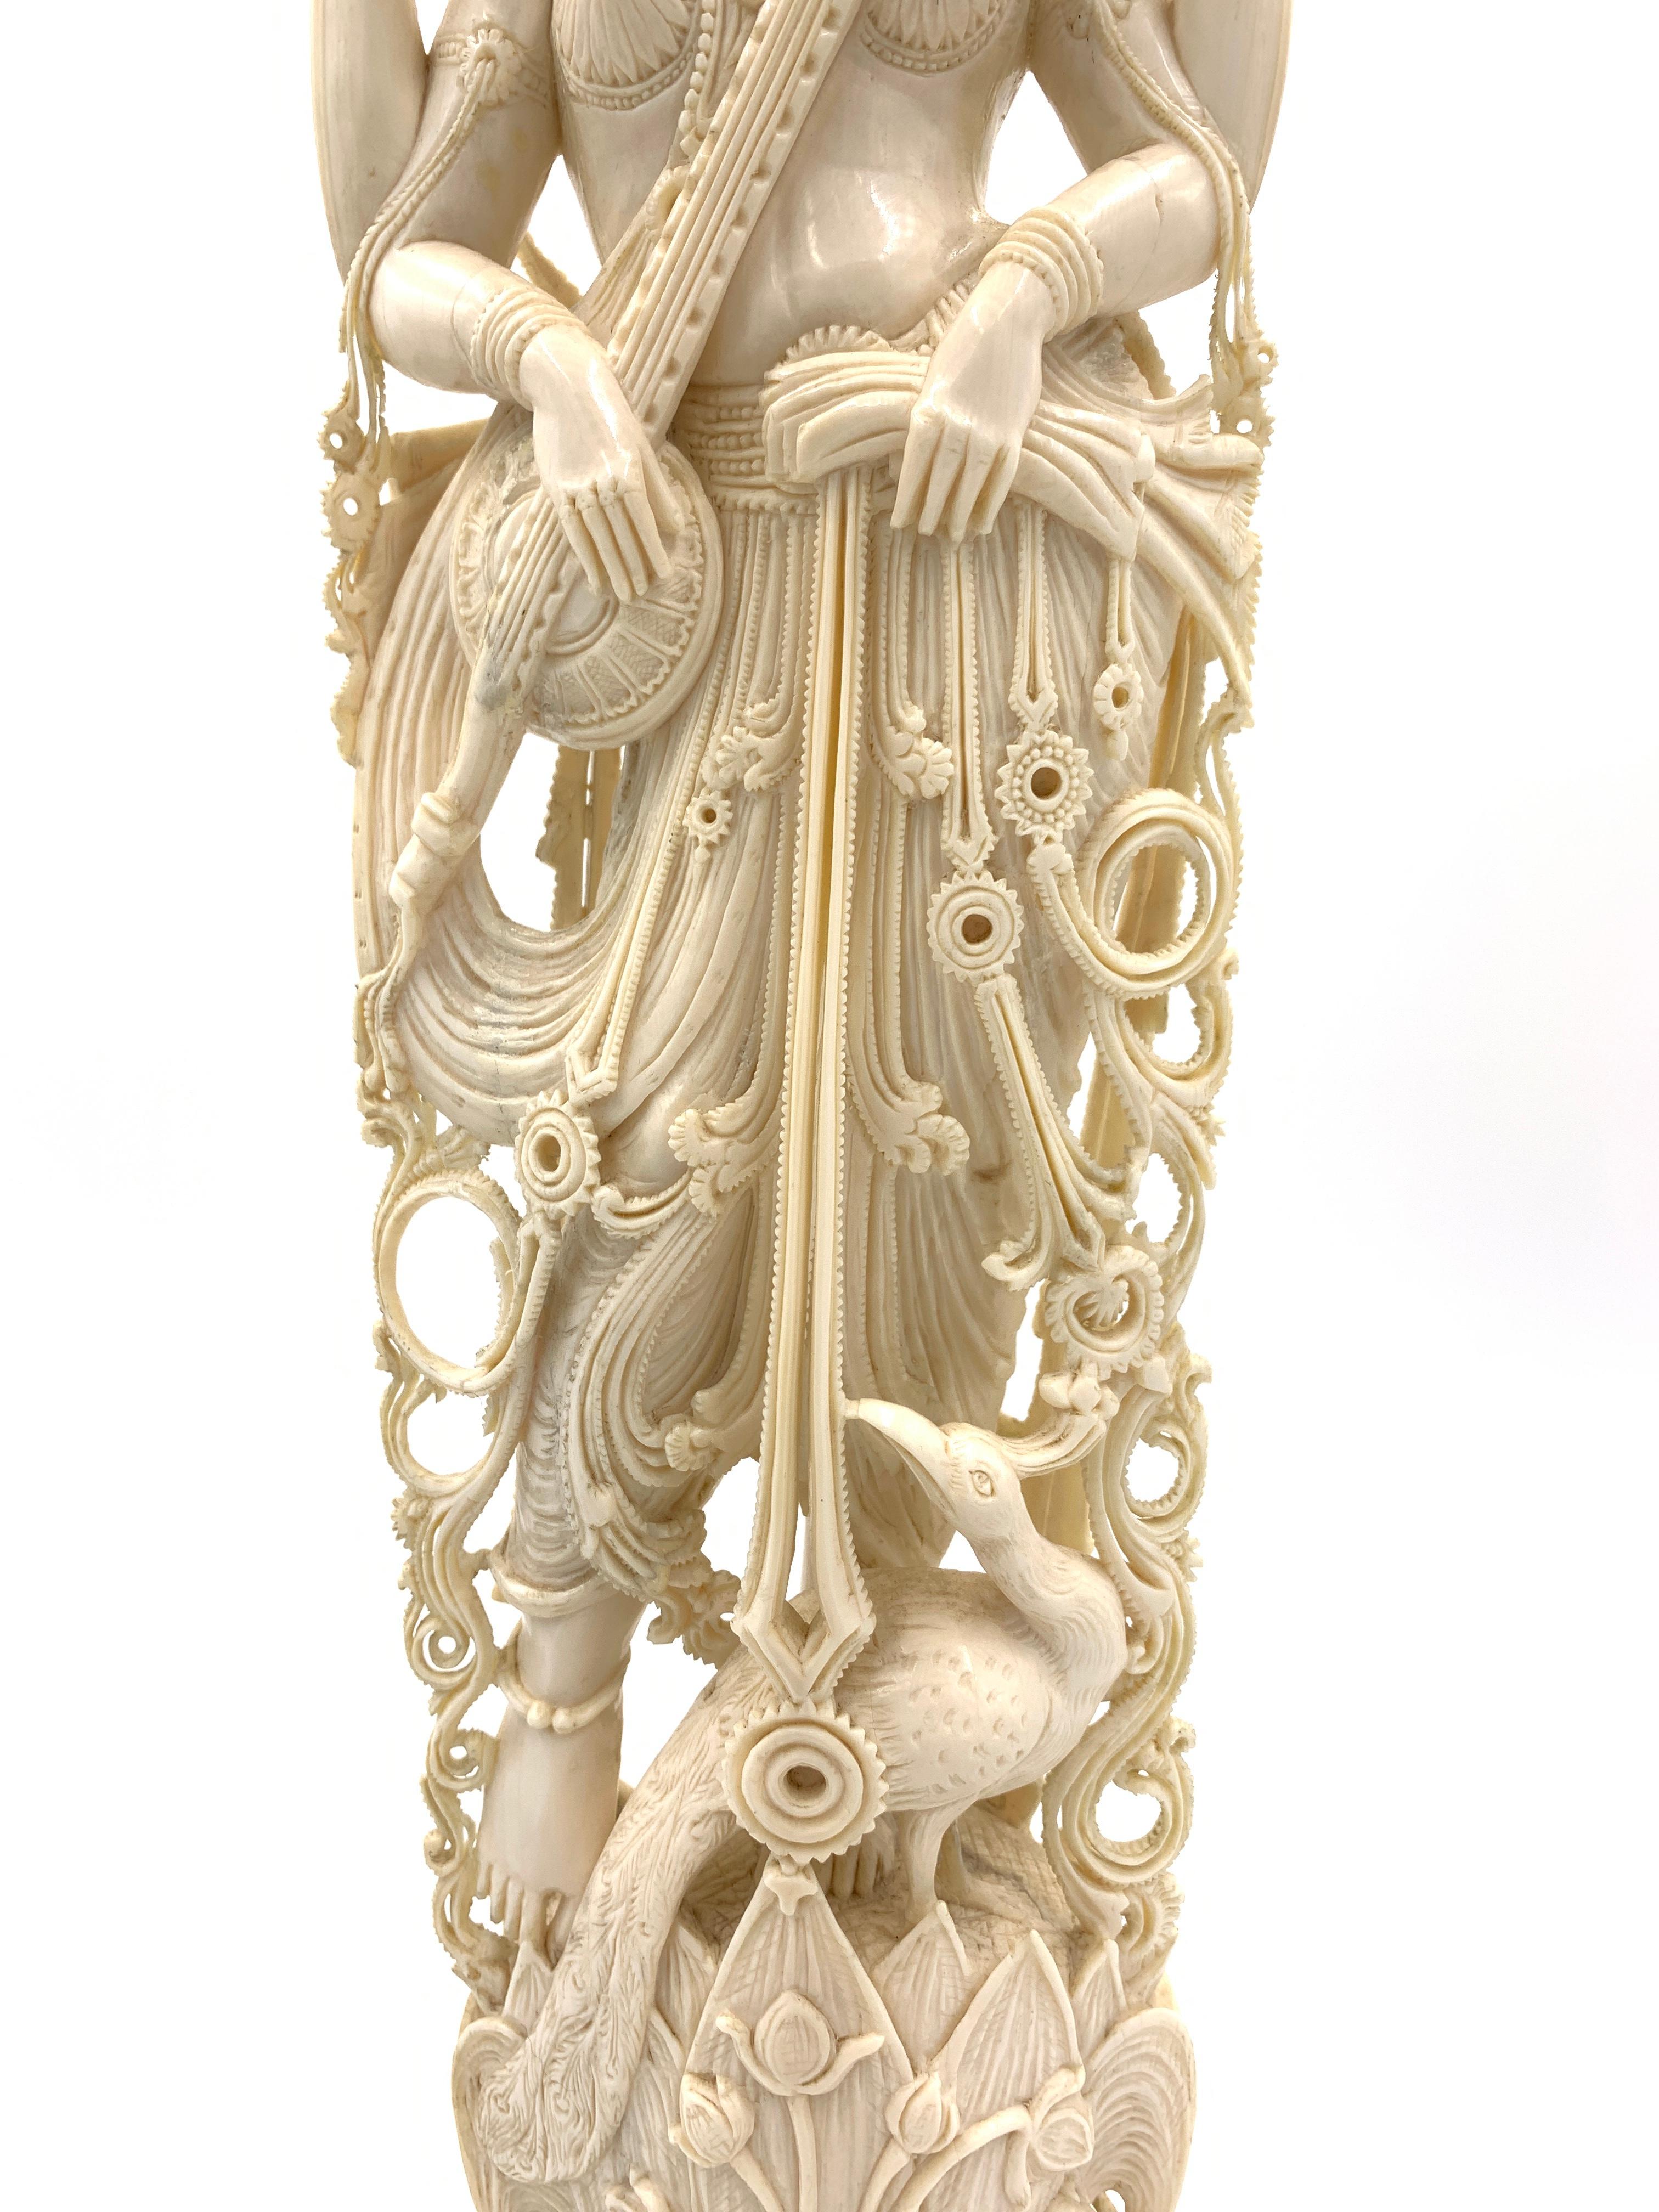 19th Century Large Antique Deeply Carved Indian Ivory God Figure Saraswati